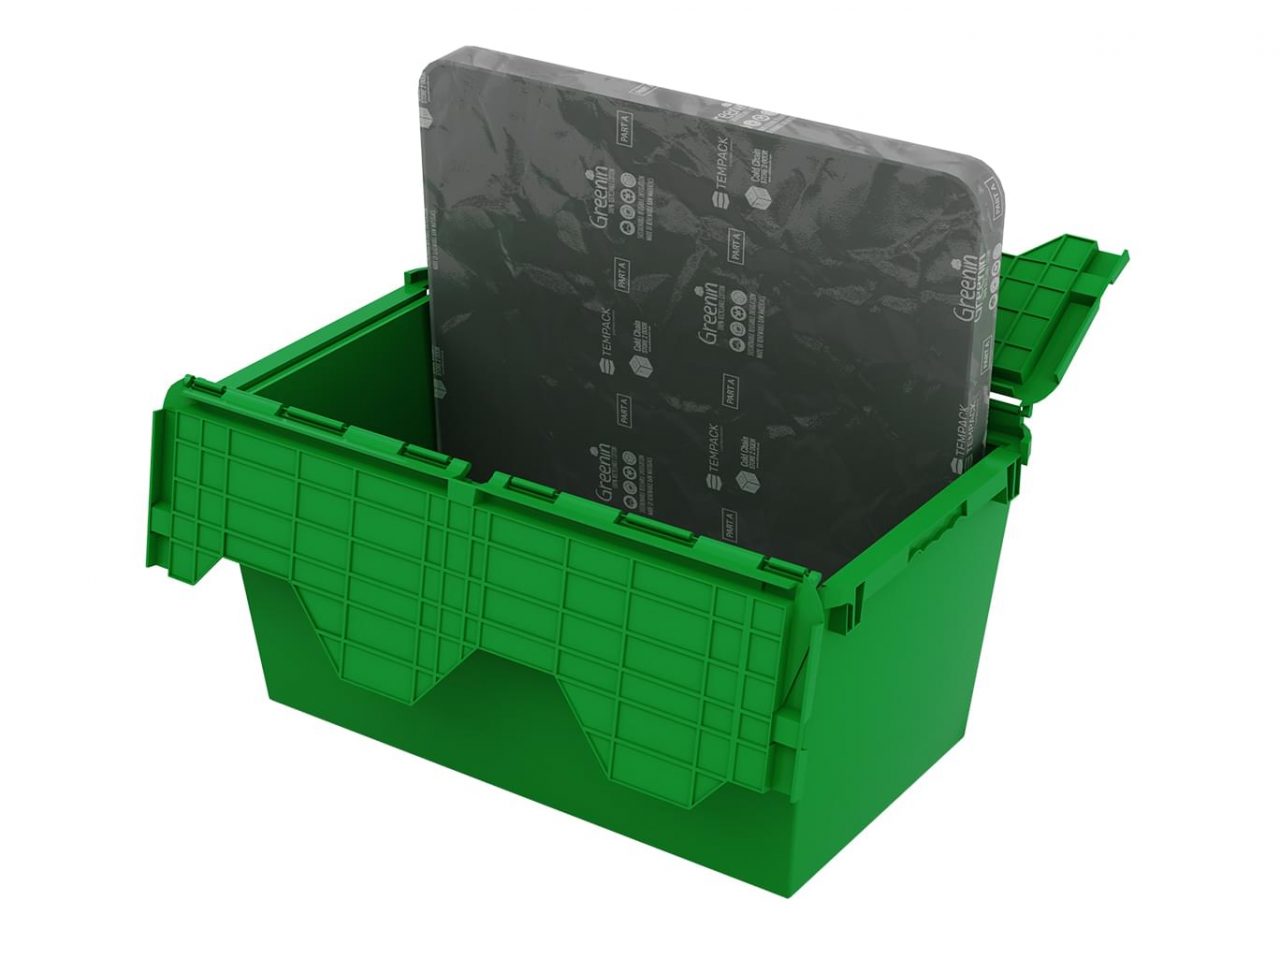 tempack-greenin-ru-sustainable-insulated-packaging-2@2x-1280x958